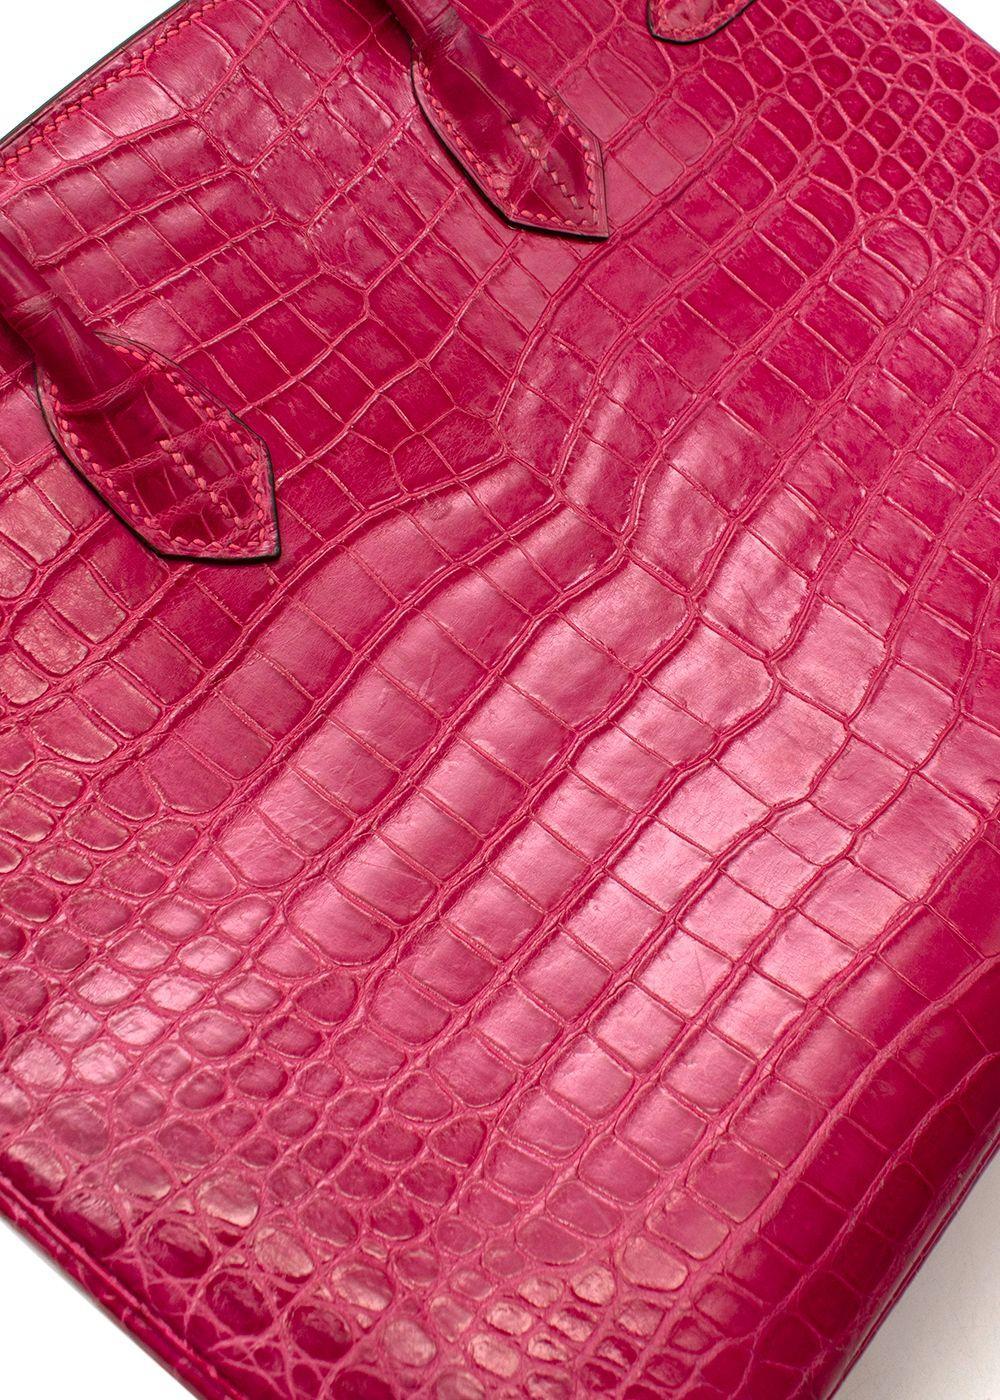 Red Hermes Fuchsia Shiny Porosus Crocodile Birkin 35 bag PHW